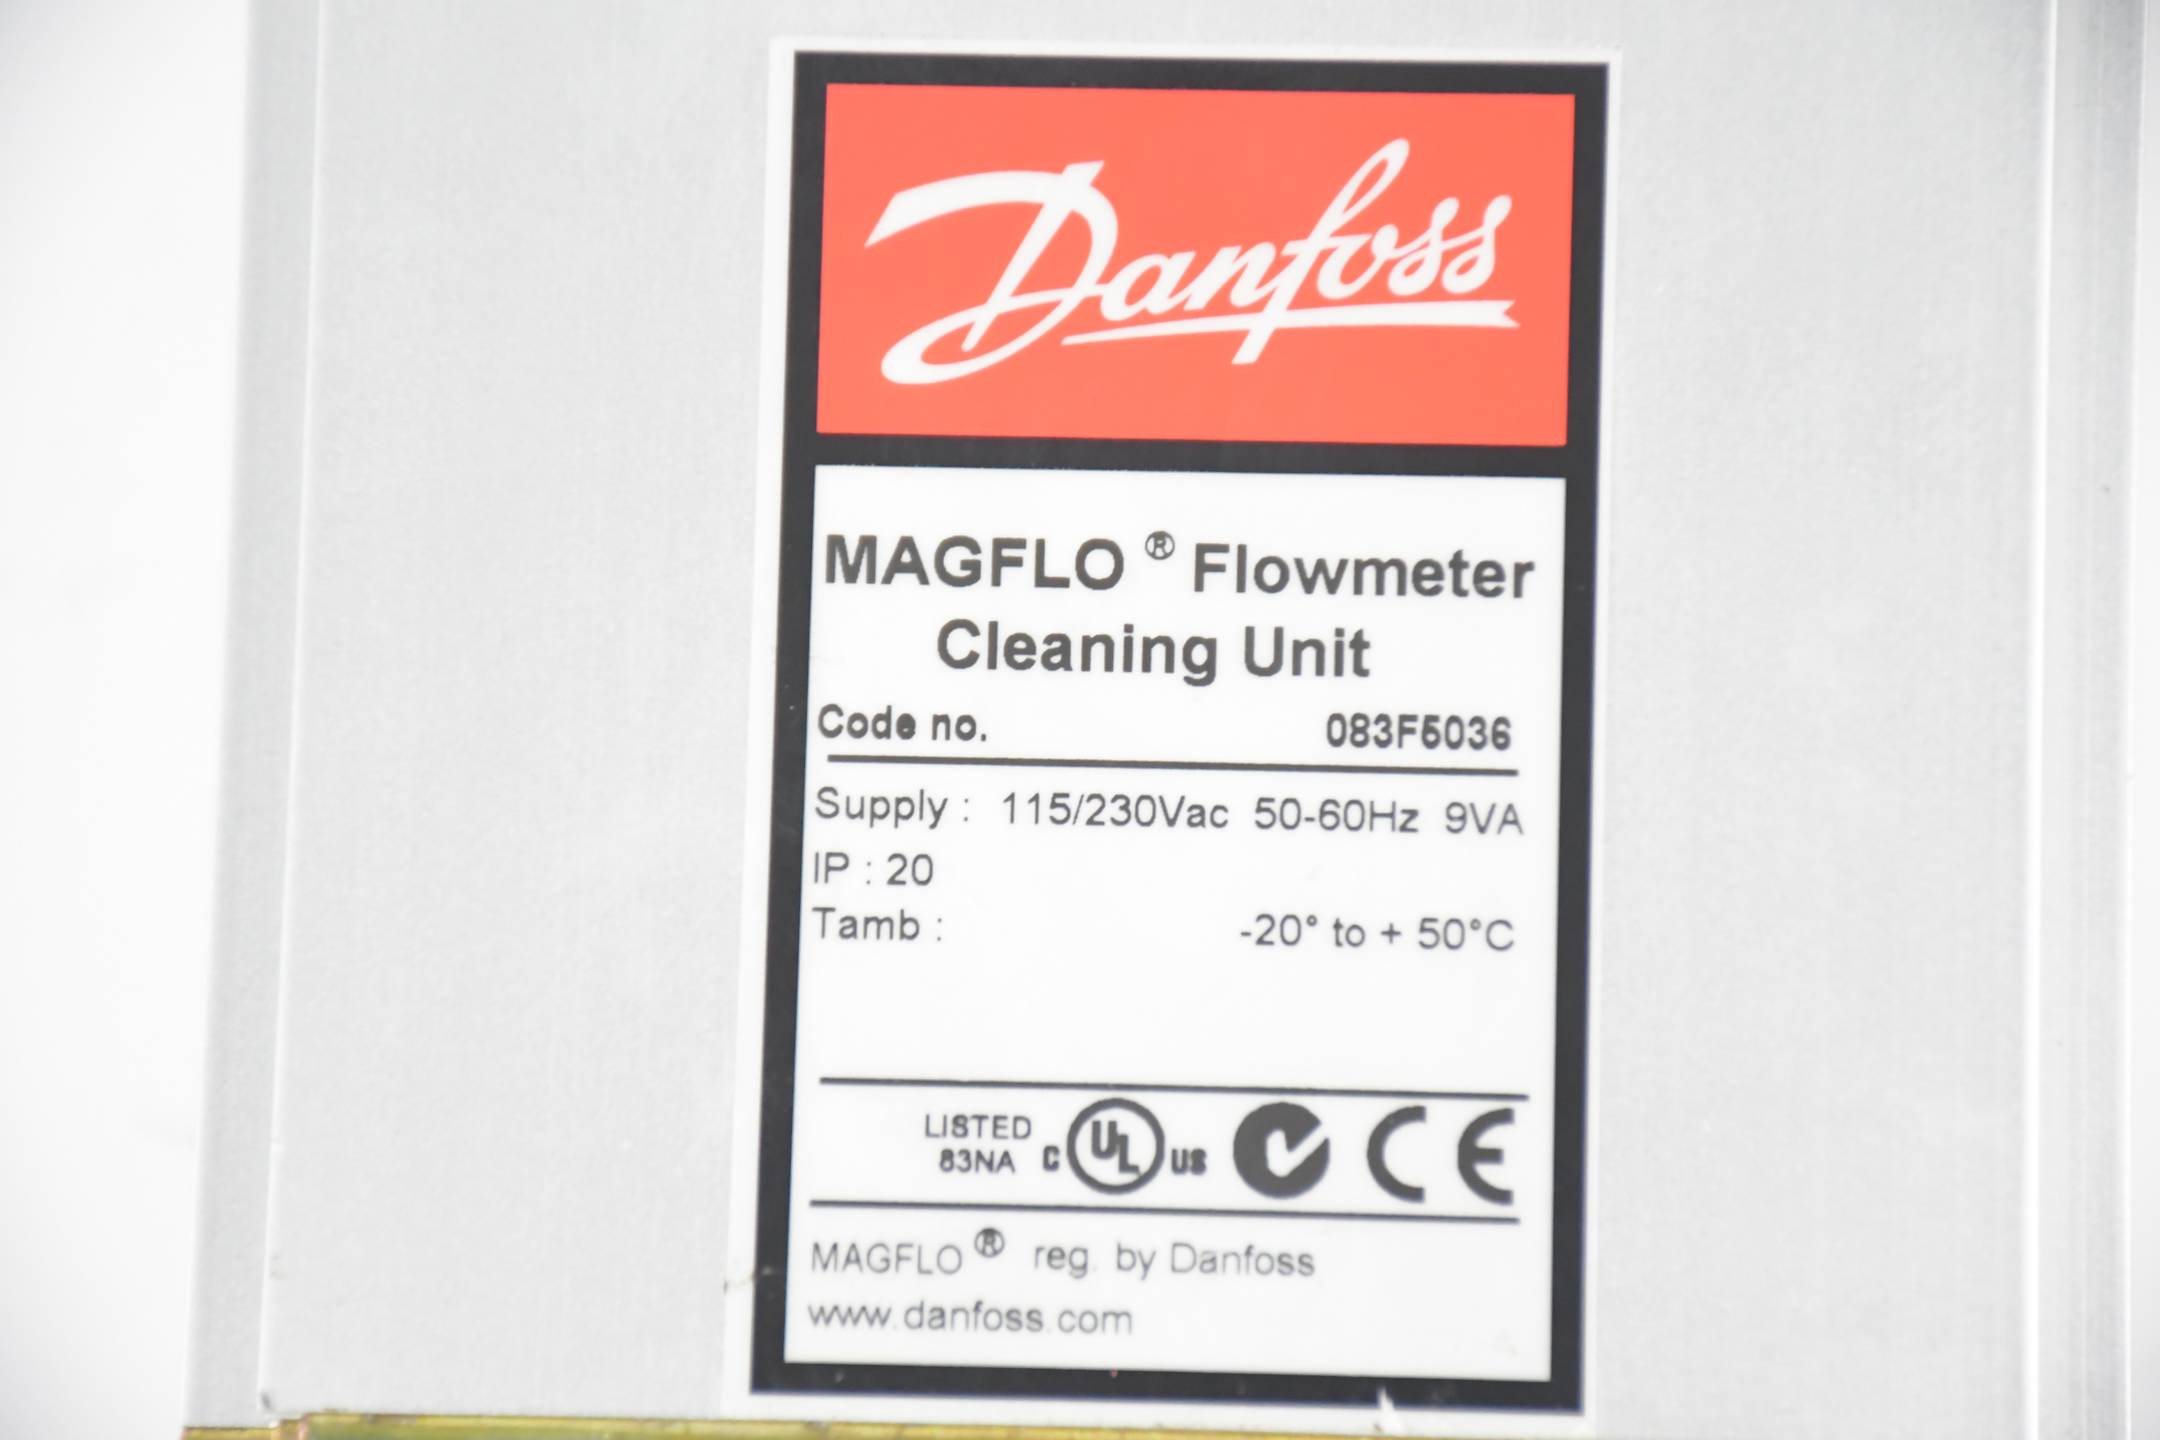 Danfoss Magflo Flowmeter Cleaning Unit 083F5036